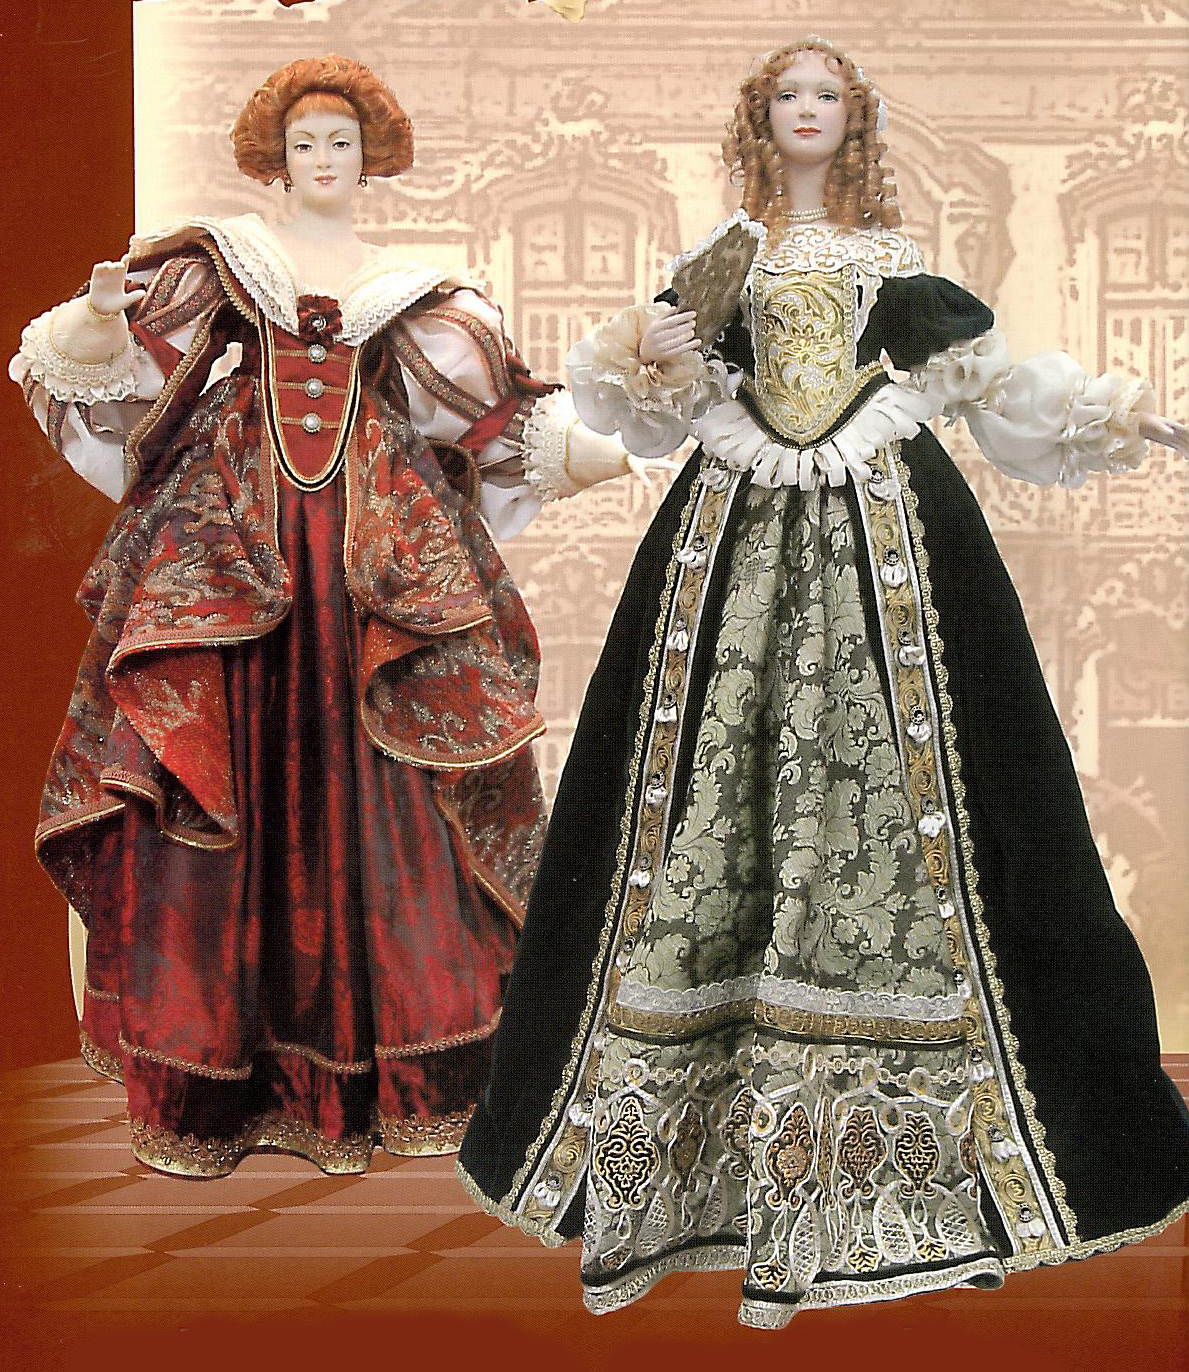 "Знатная дама двора Людовика XIII" 77,8 см. "Дама галантного кавалера" 75,5 см. Керамика, фарфор, текстиль.